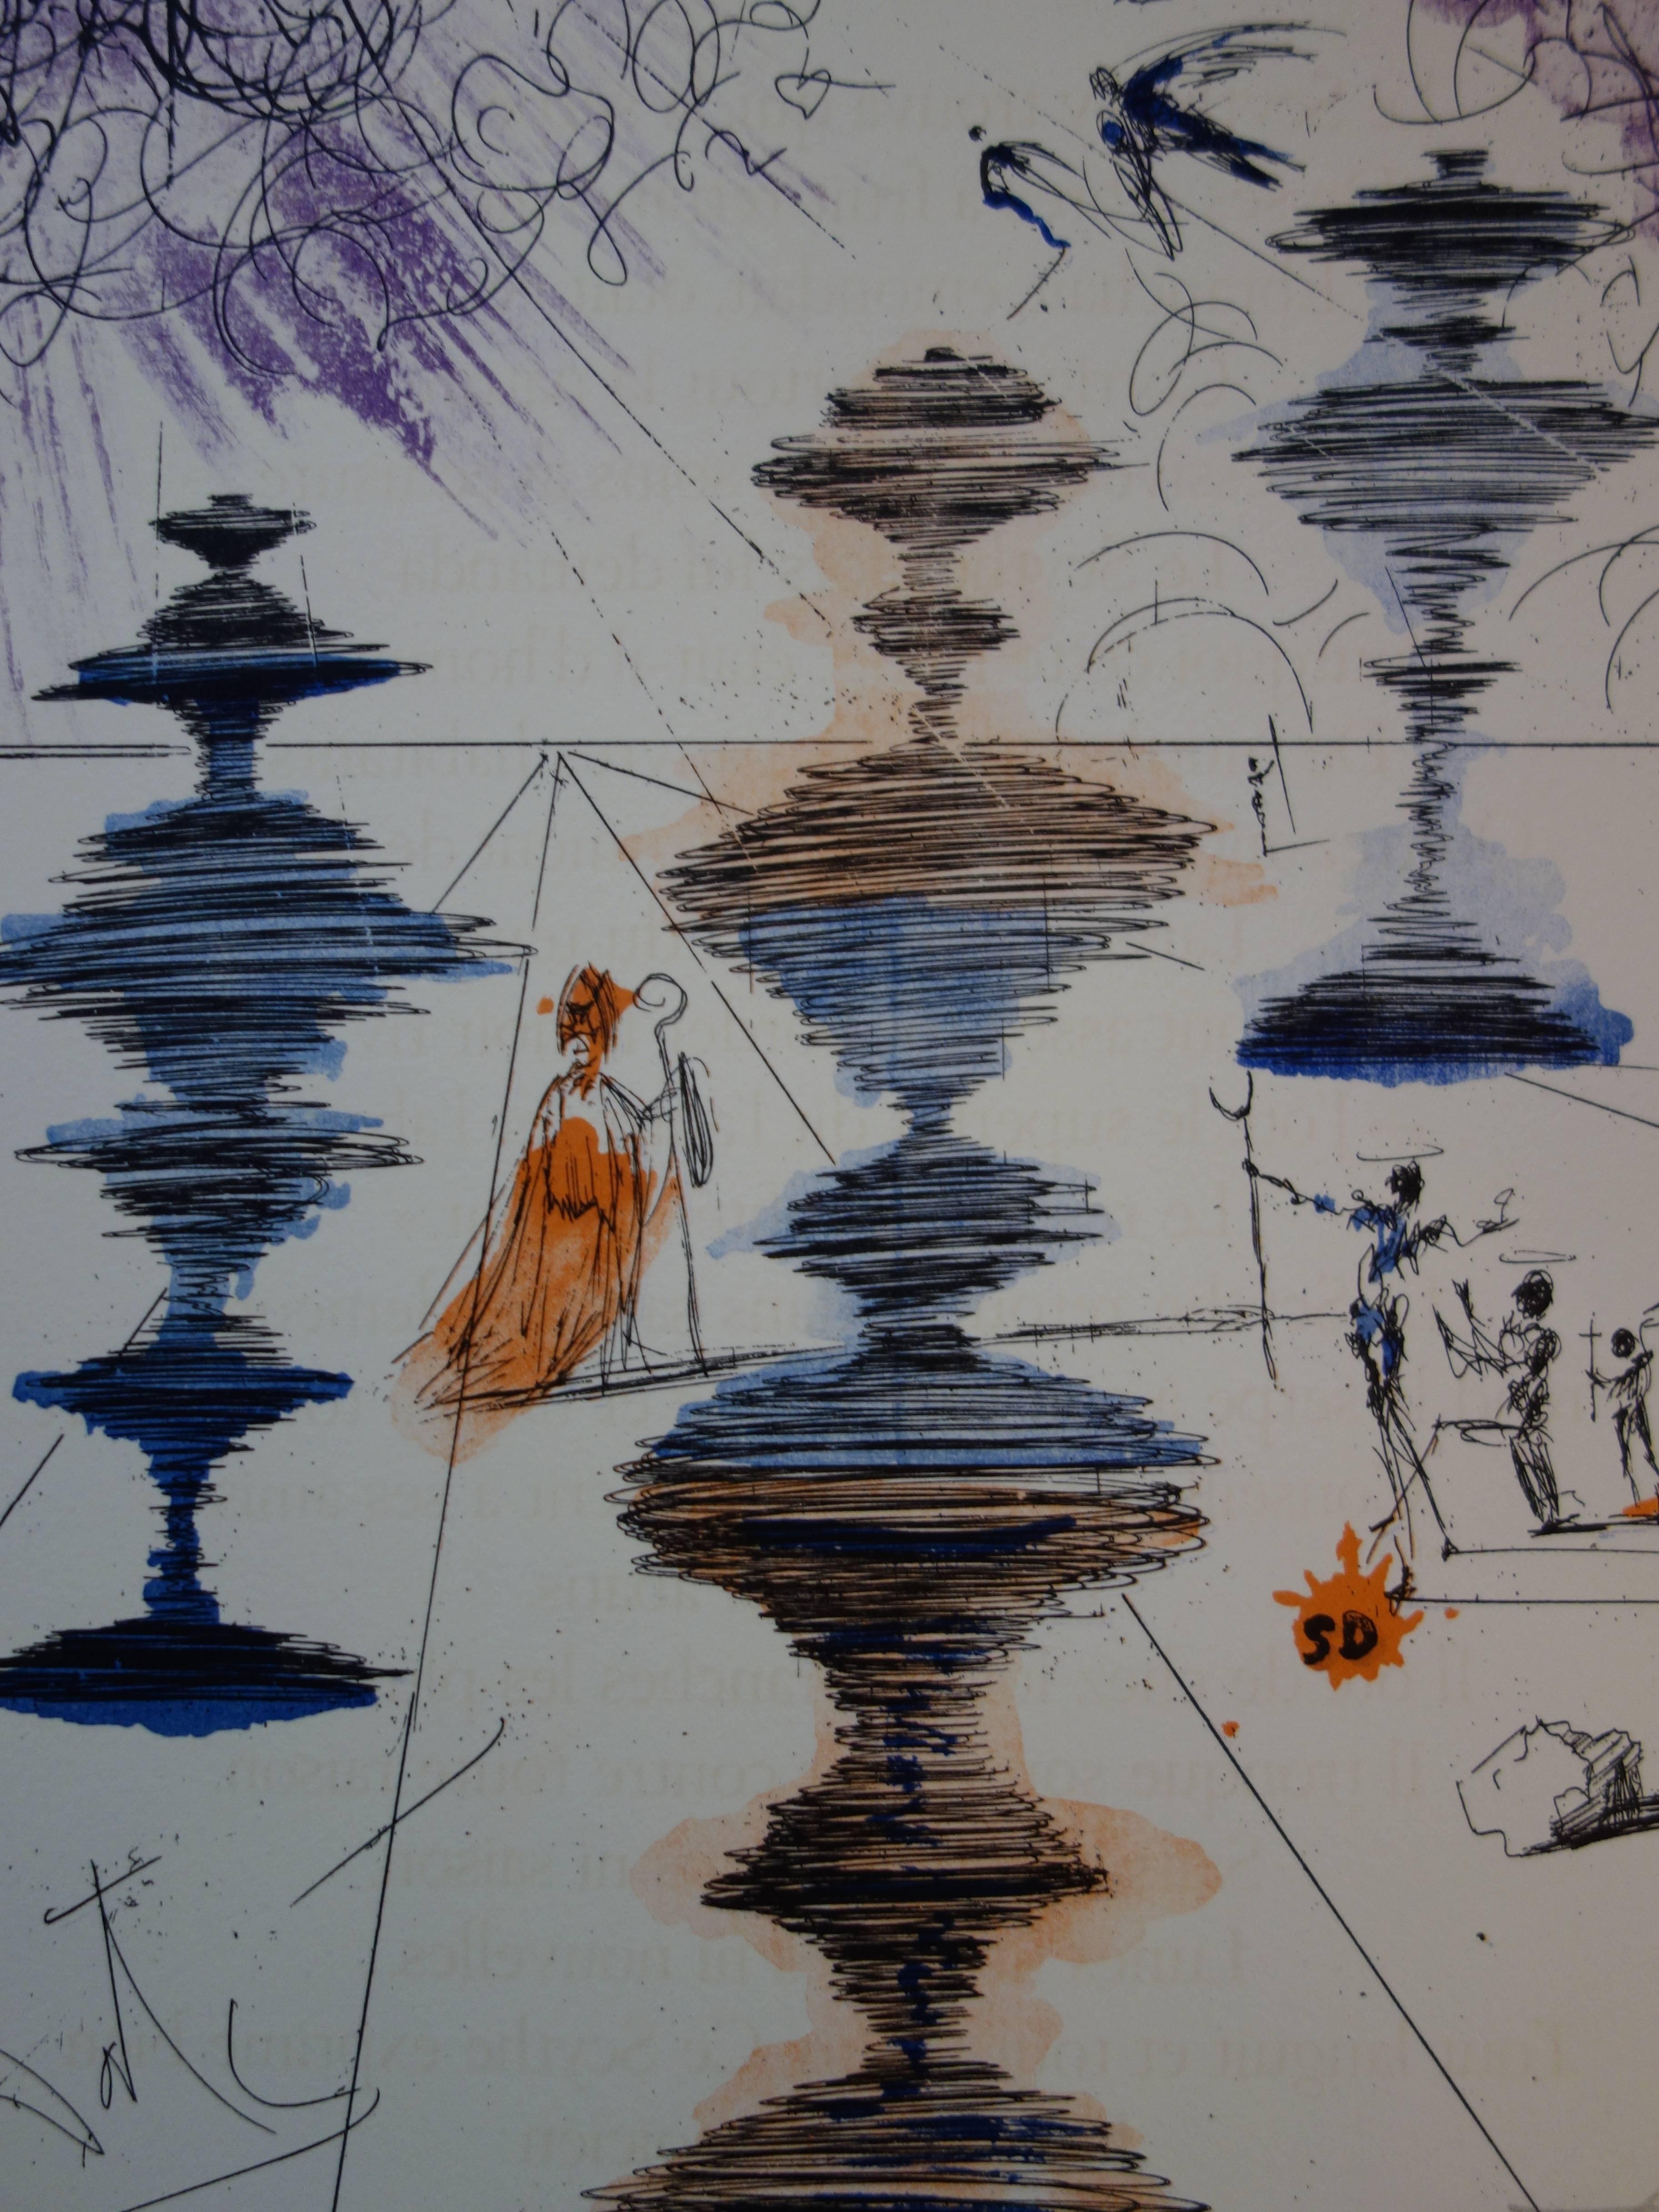 The Scythe philosopher - Original Handsigned Lithograph - 1967 - Surrealist Print by Salvador Dalí